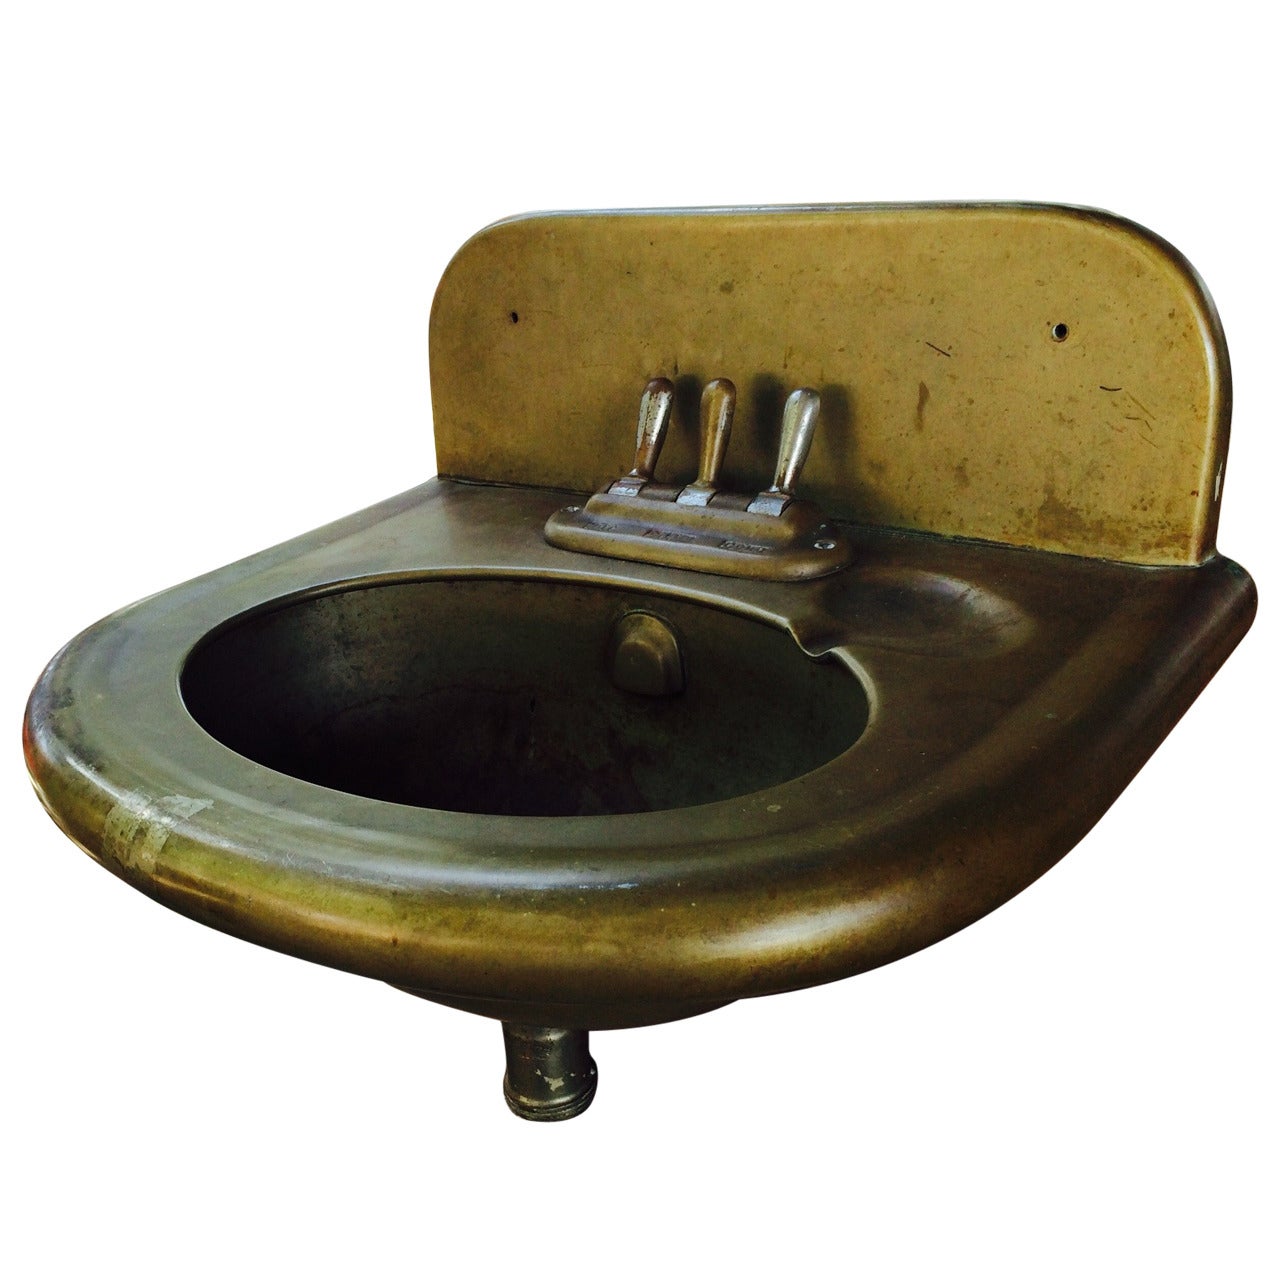 Railroad Sleeper Car, Solid Brass Sink, circa 1910